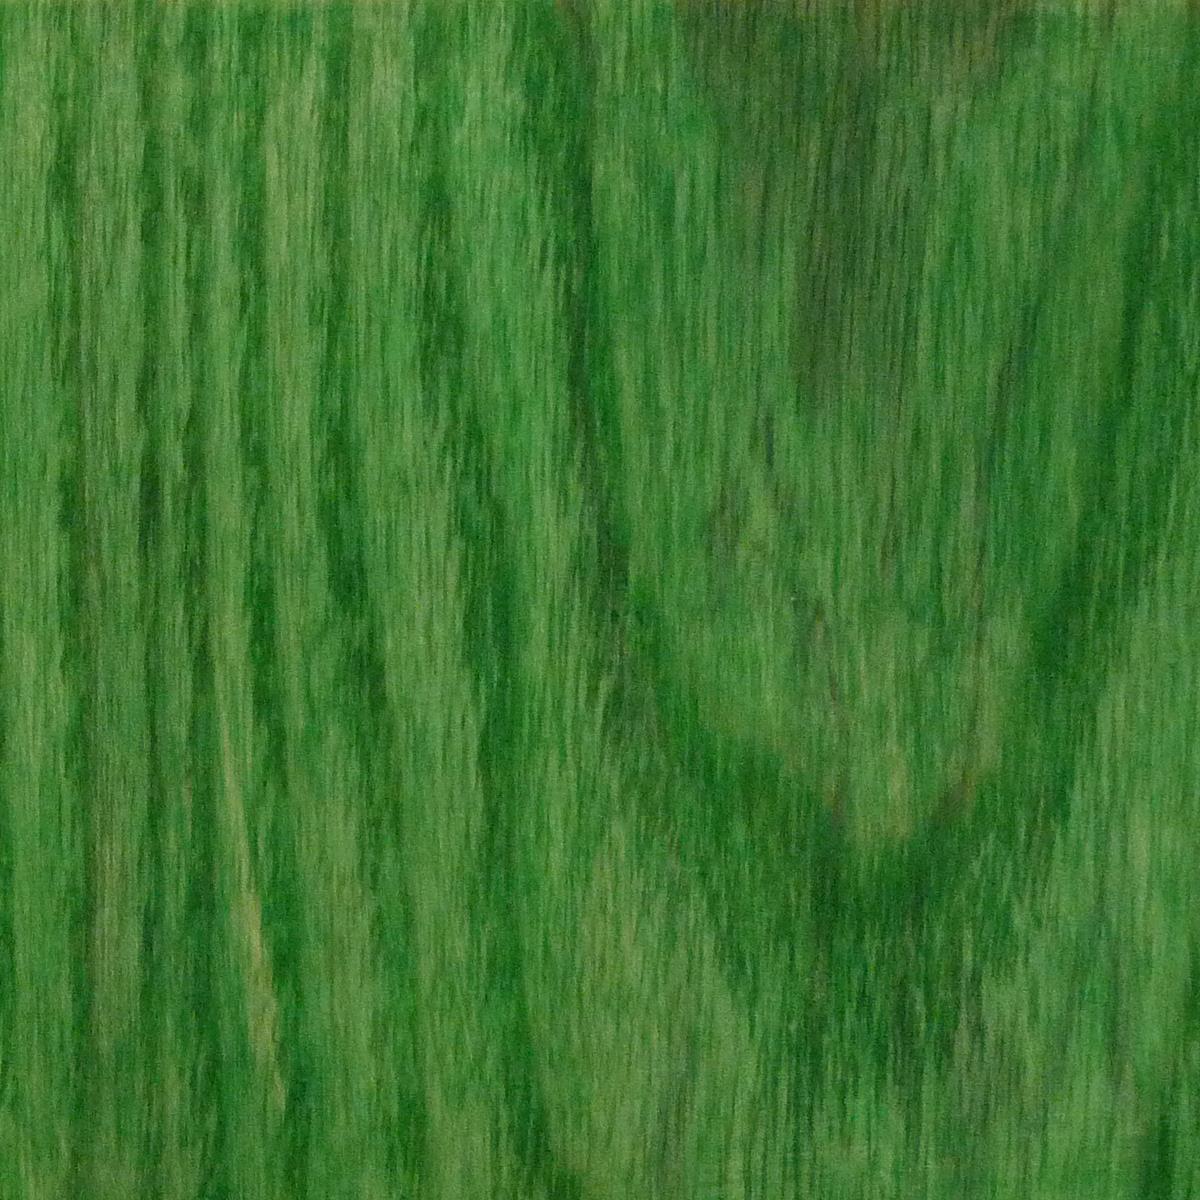 dartfords Lime Green Interior Spirit Based Wood Dye - 230ml Tin